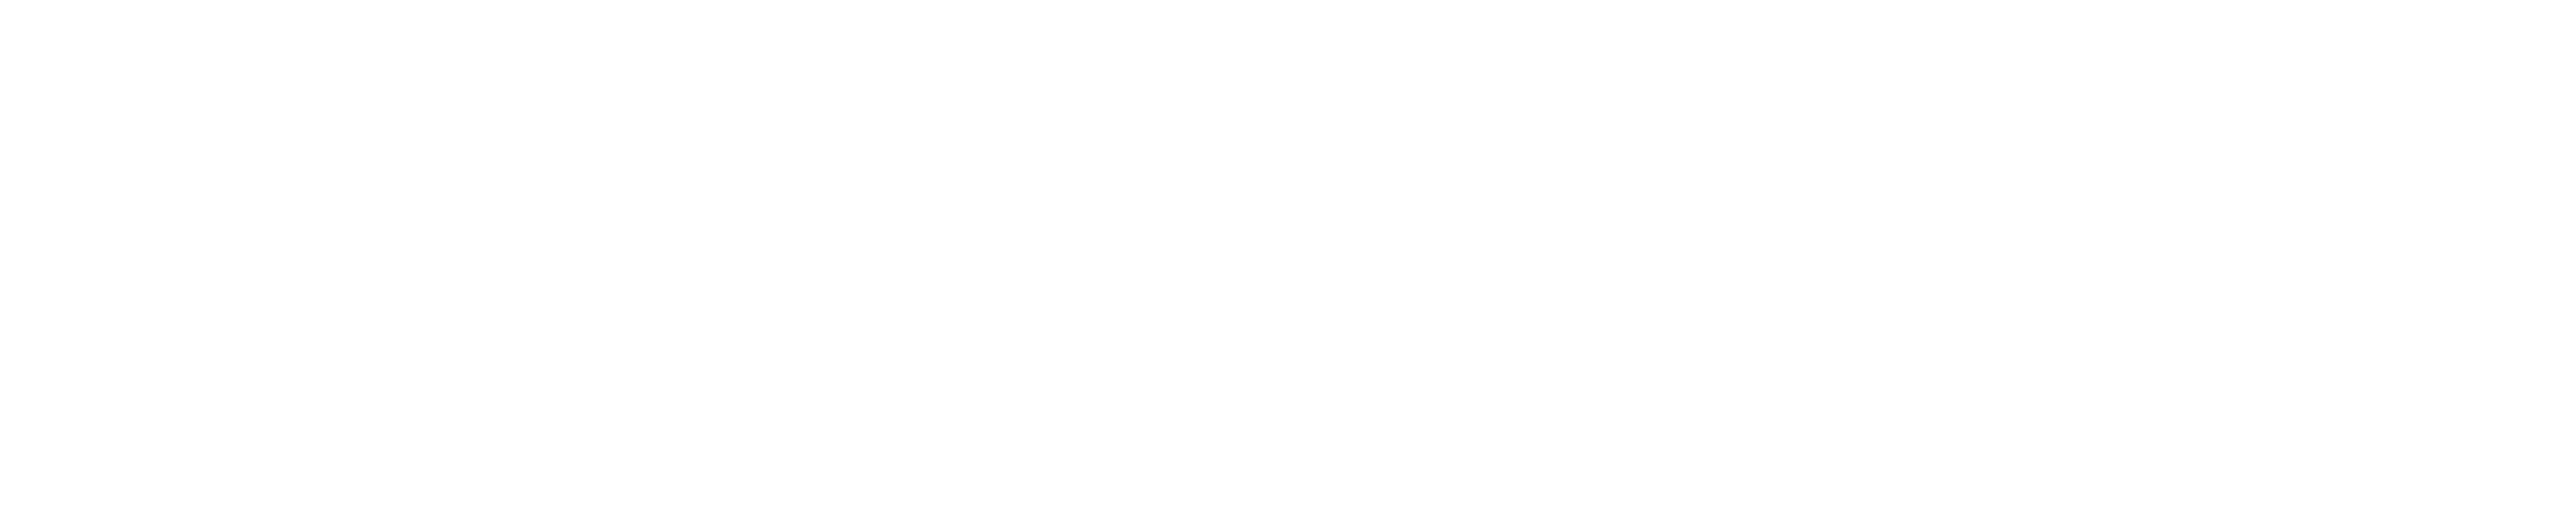 ReviveTelehealth_inverse-divider-broken